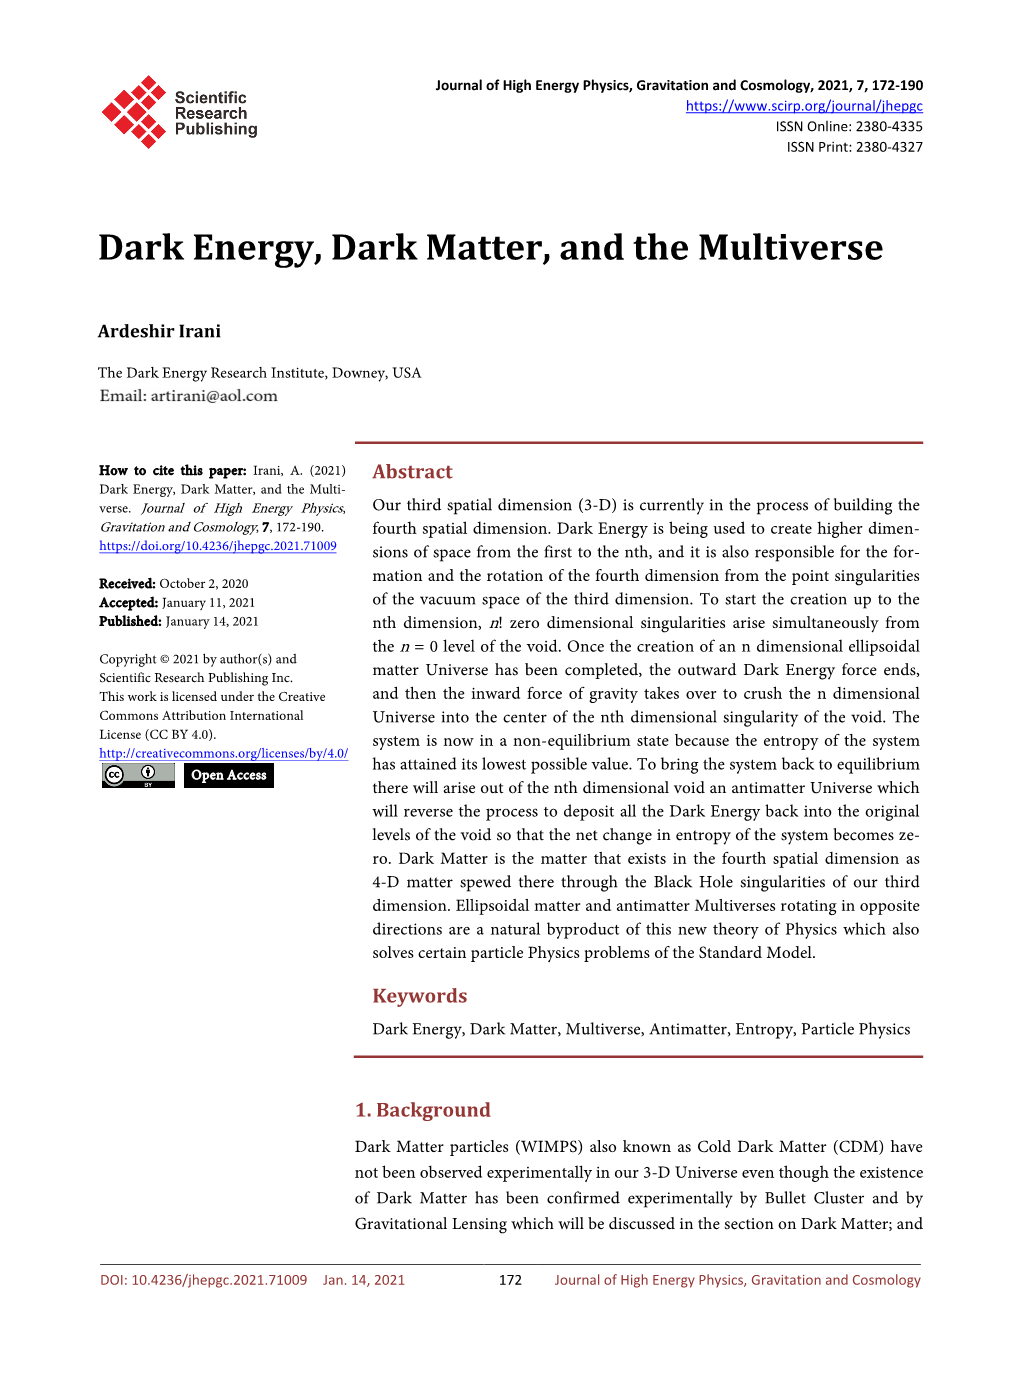 Dark Energy, Dark Matter, and the Multiverse